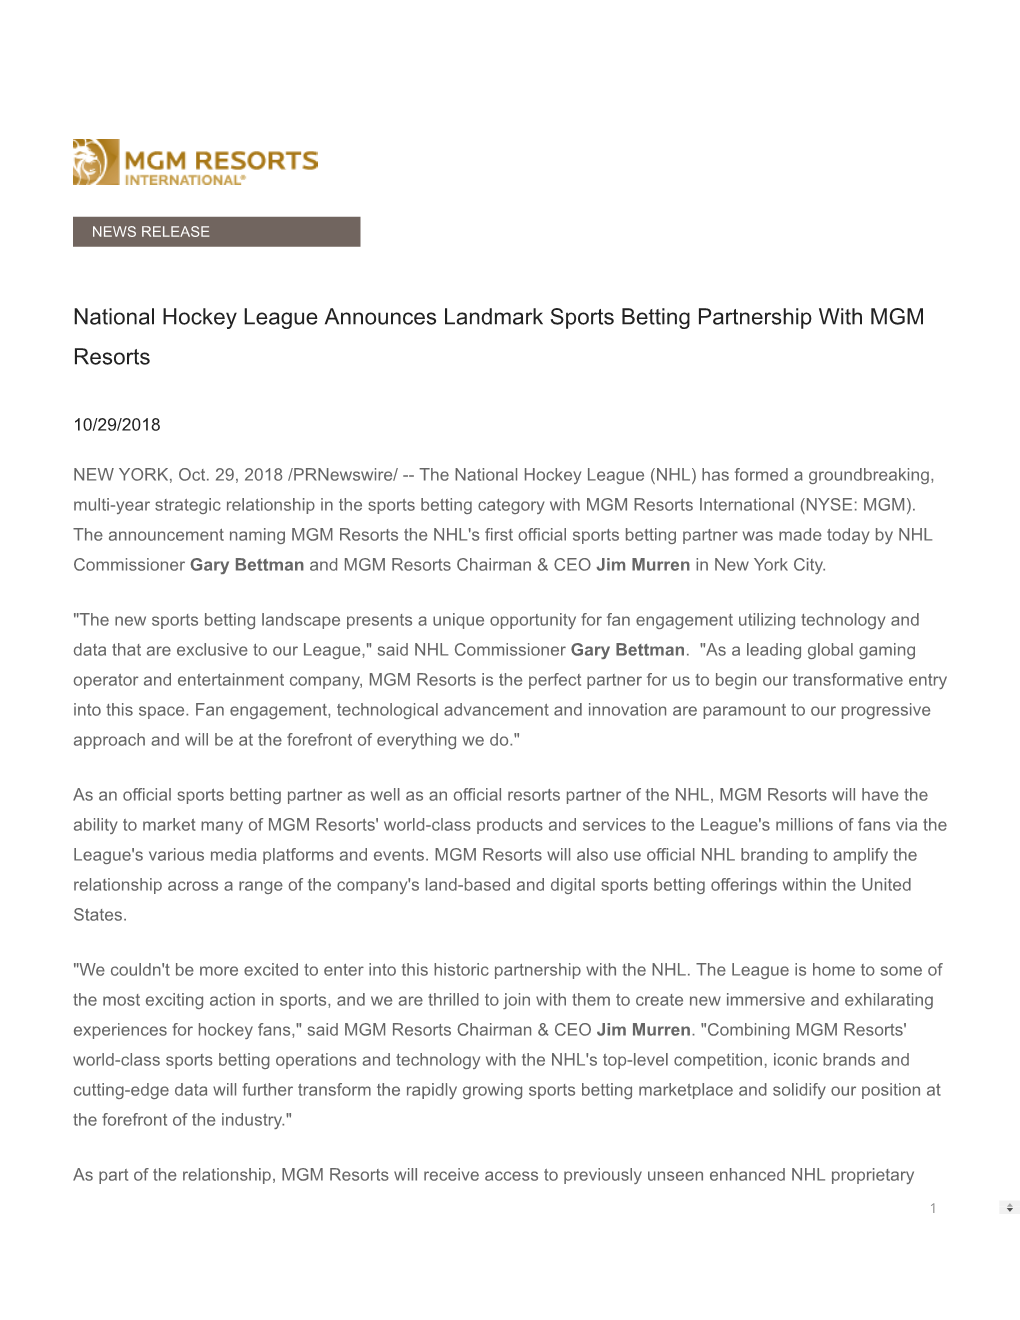 National Hockey League Announces Landmark Sports Betting Partnership with MGM Resorts